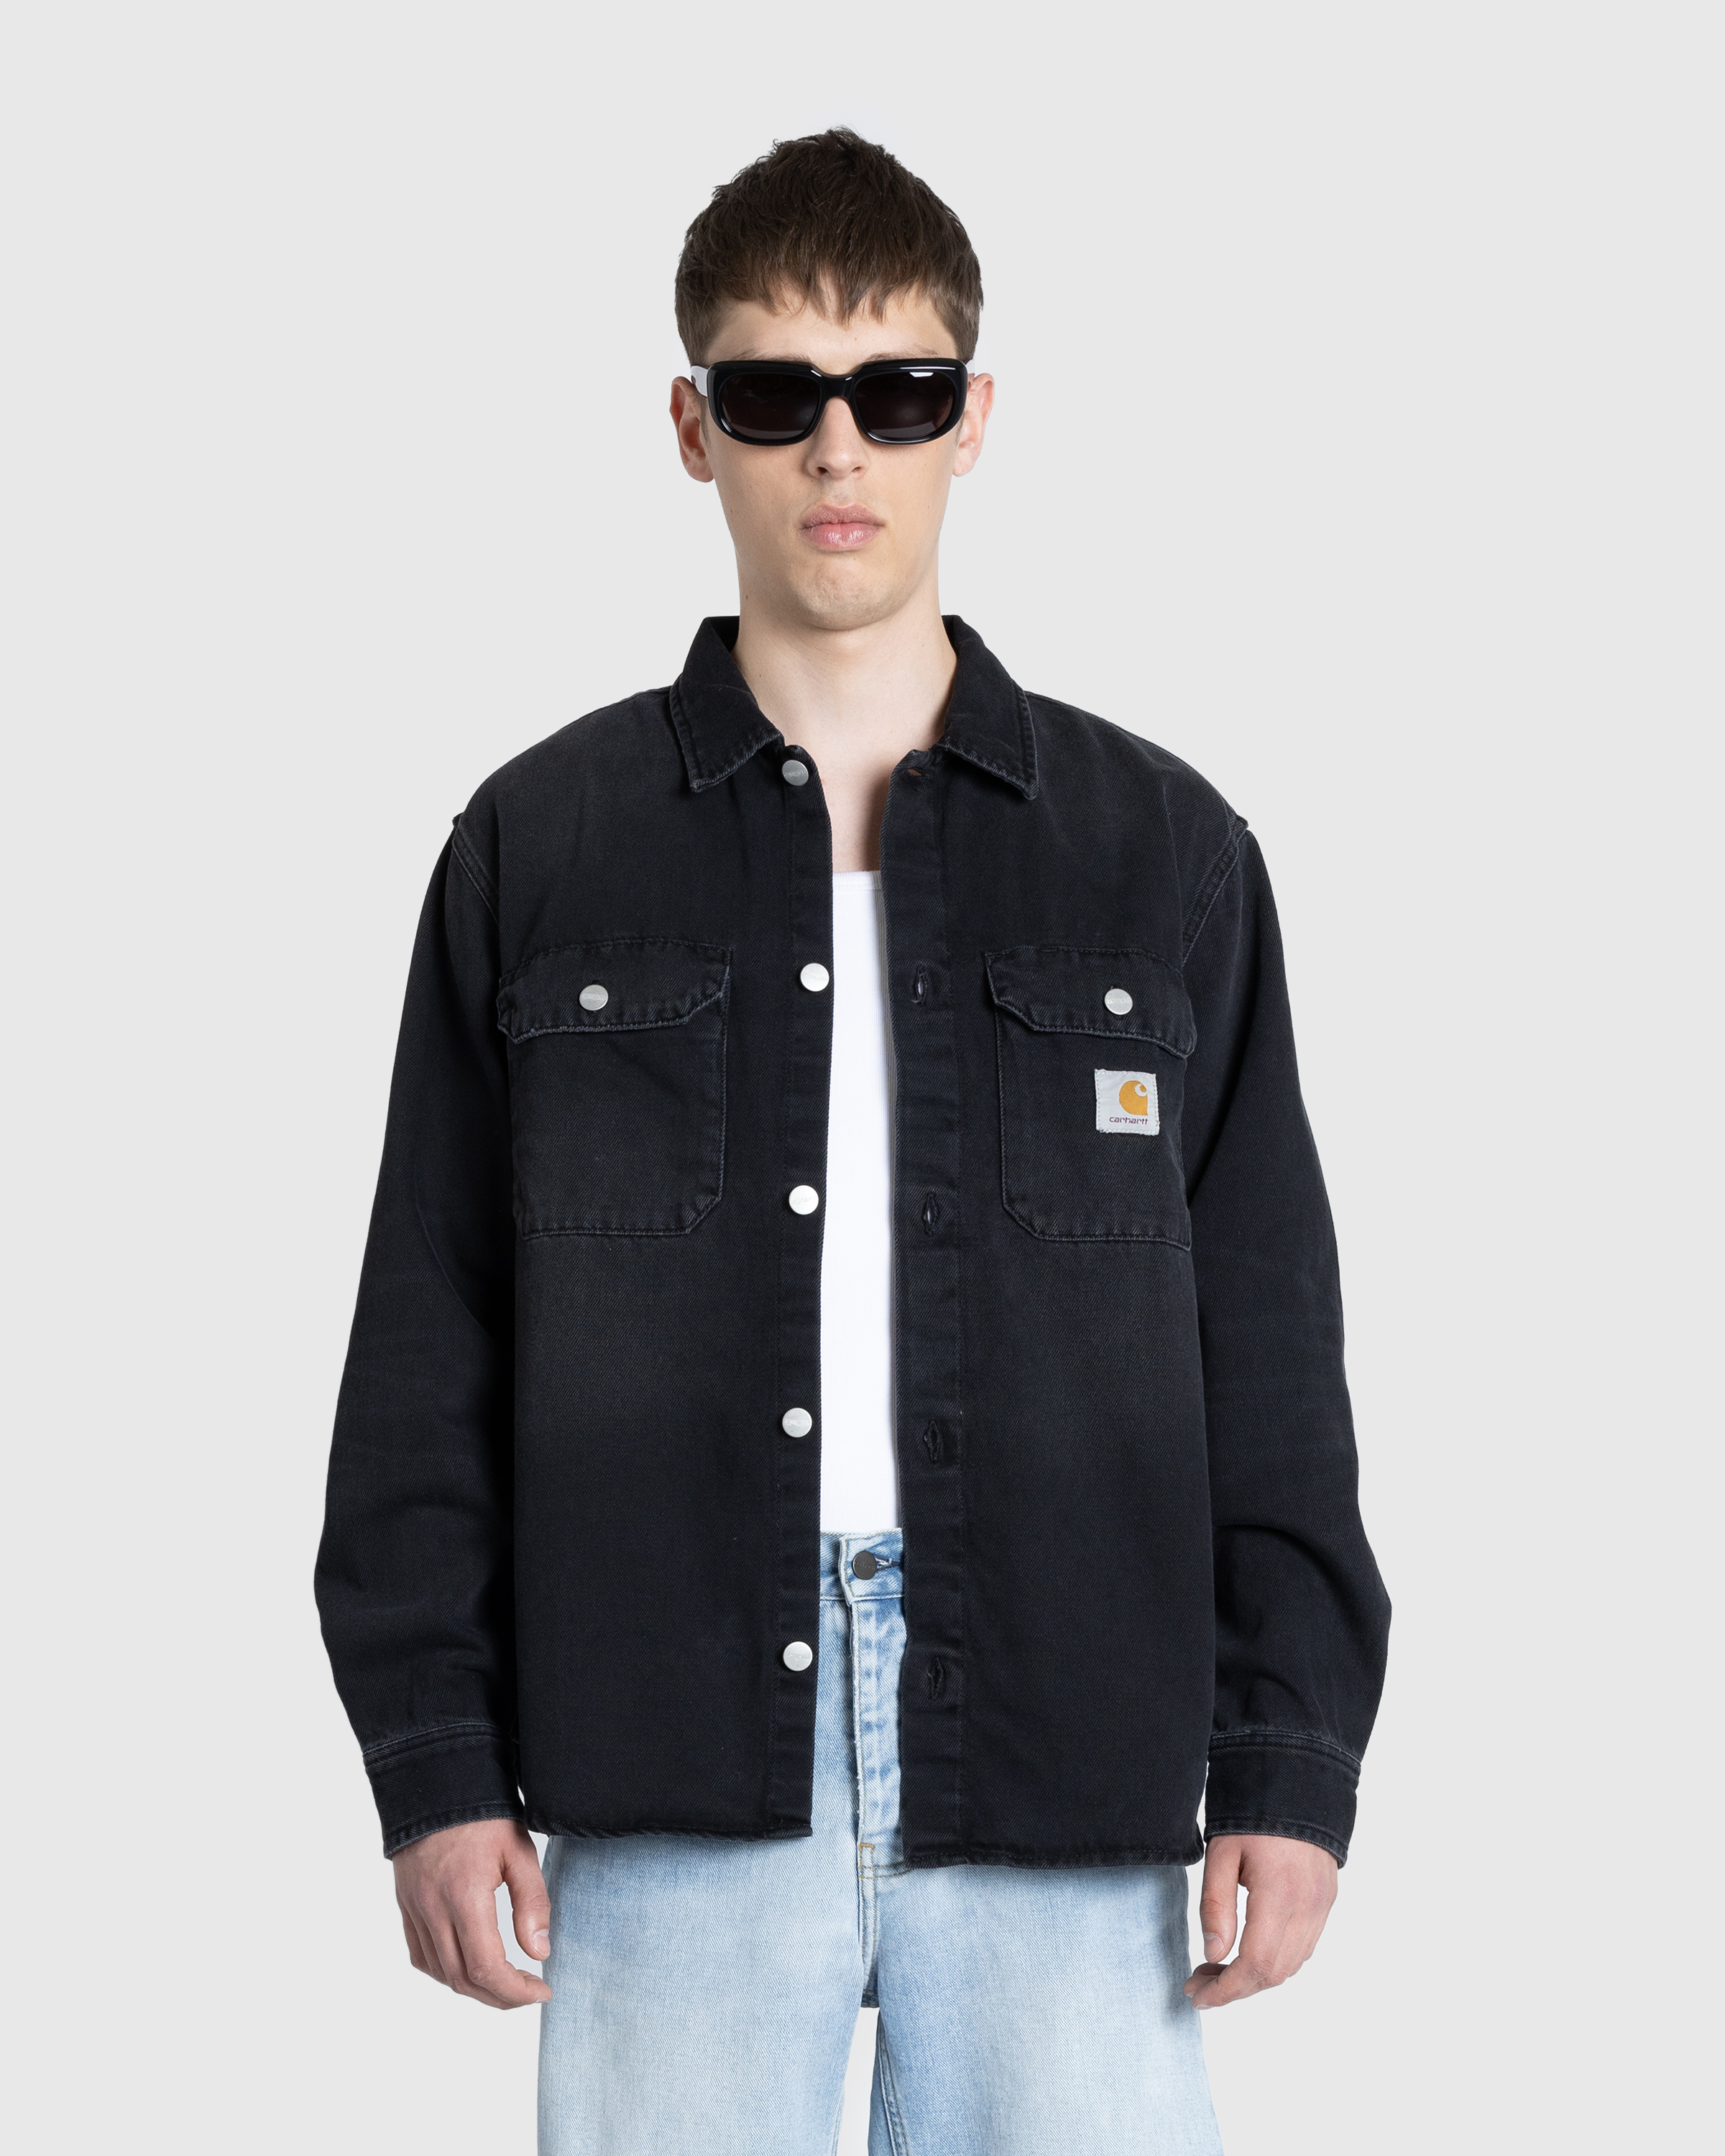 Carhartt WIP – Harvey Shirt Jacket Black/Dark Used Wash - Shirts - Black - Image 2